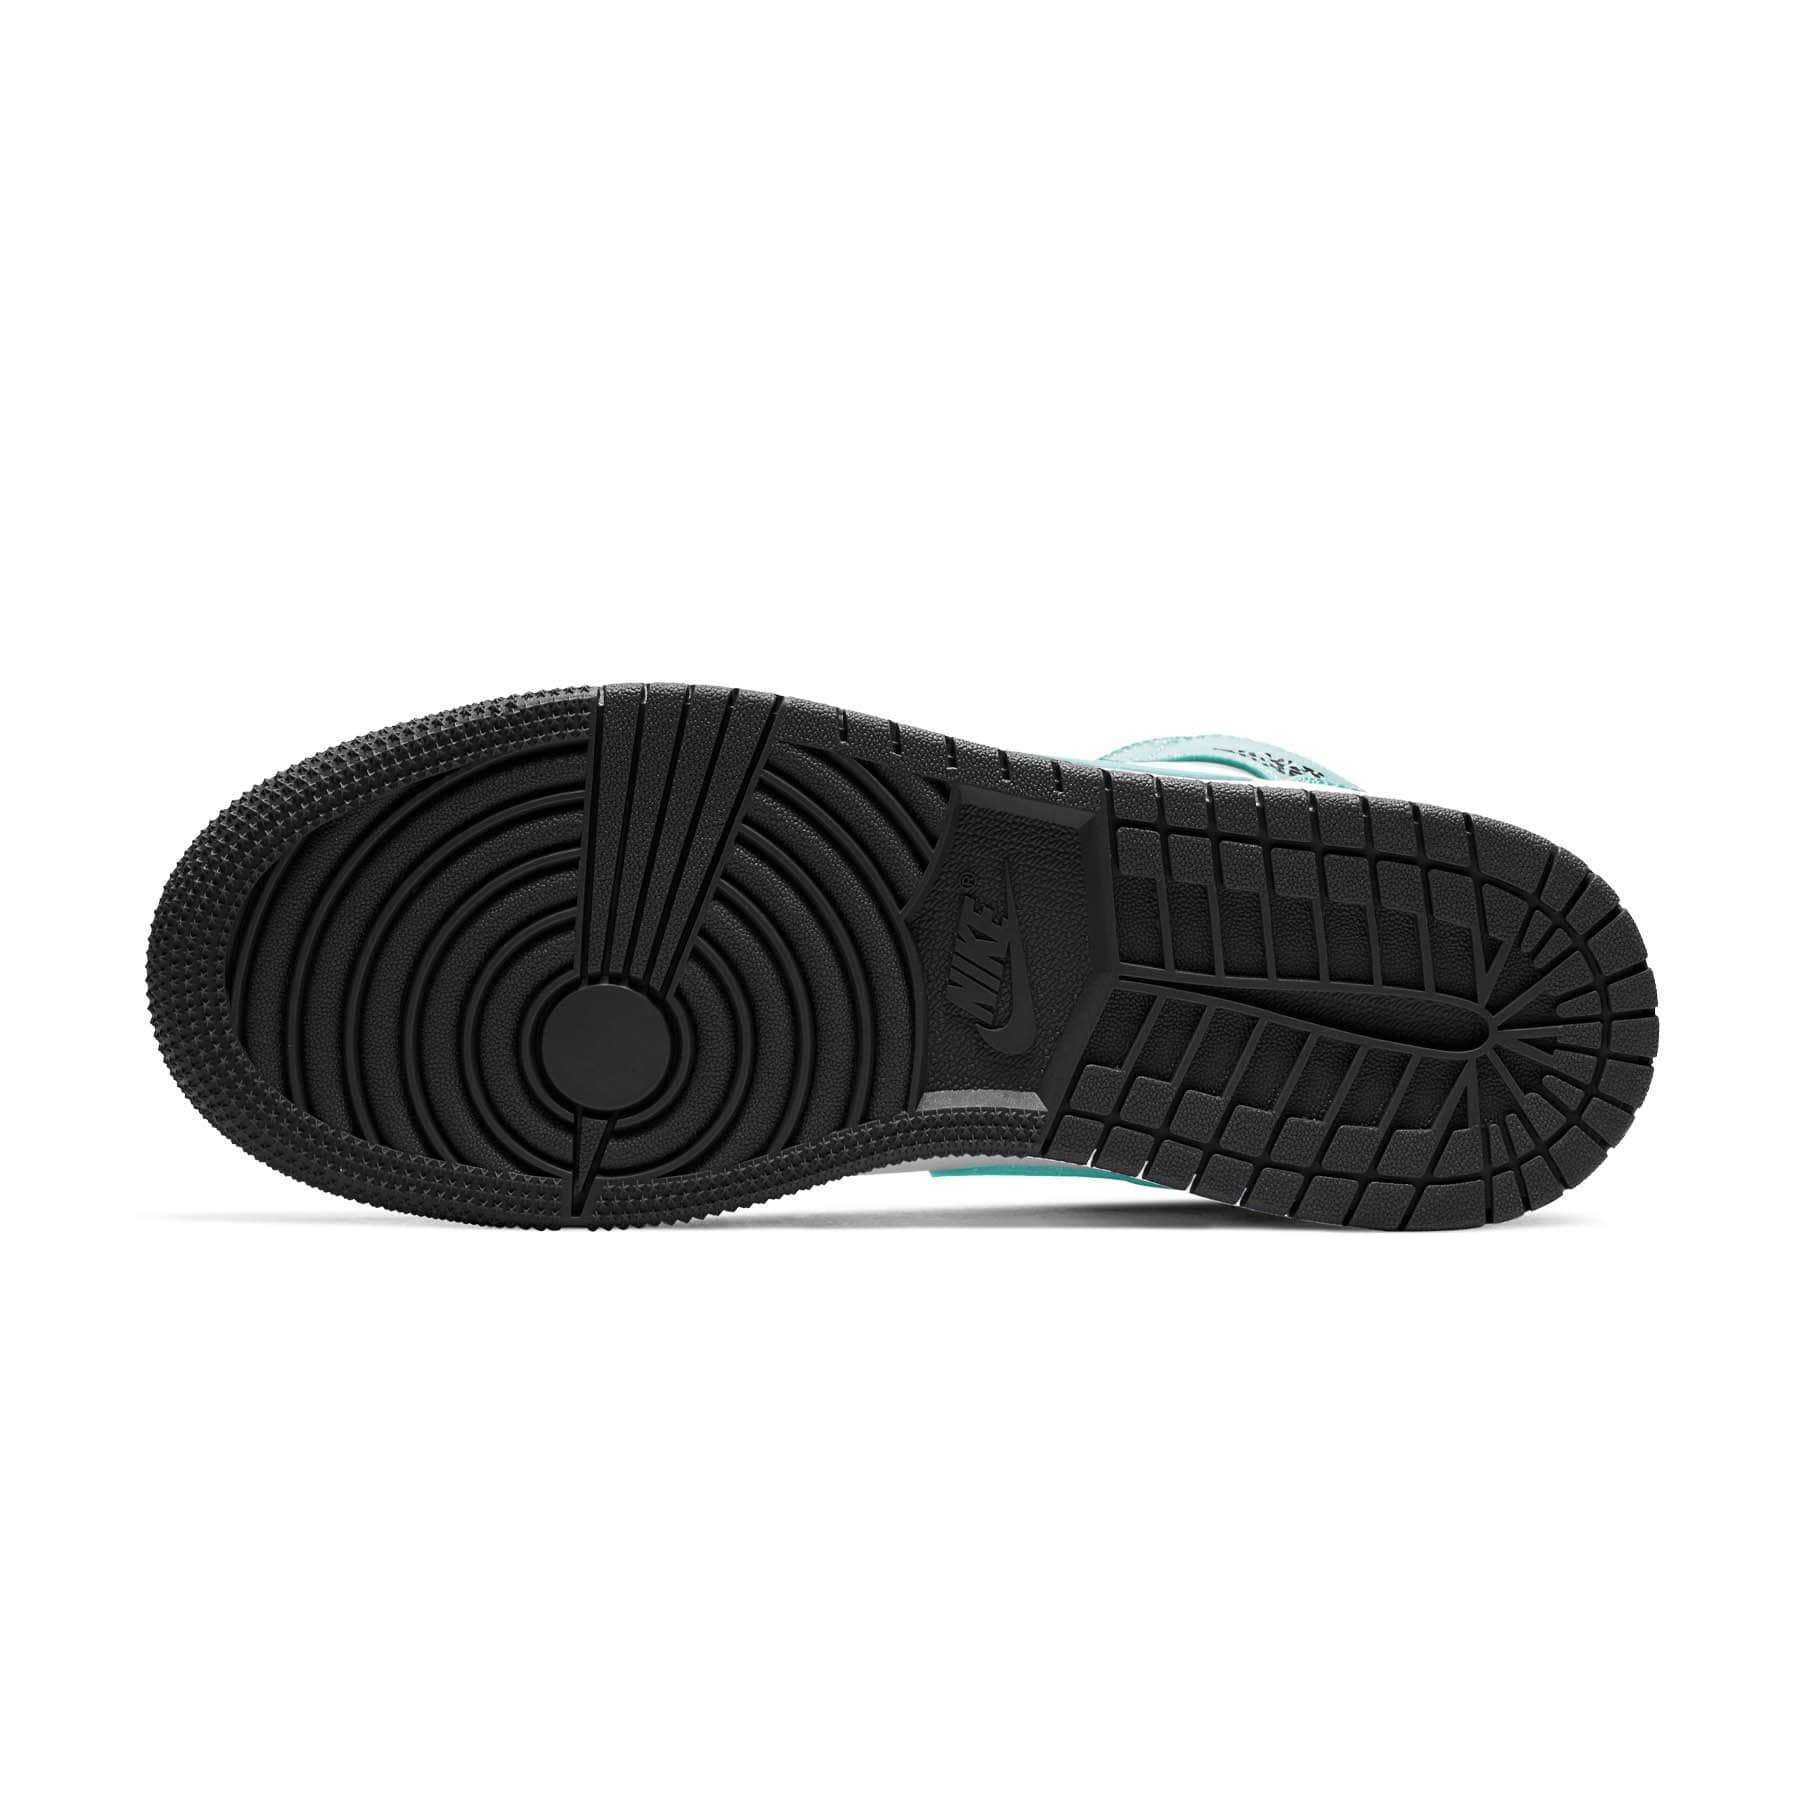 Double Boxed  229.99 Nike Air Jordan 1 Mid Tropical Twist Igloo Double Boxed